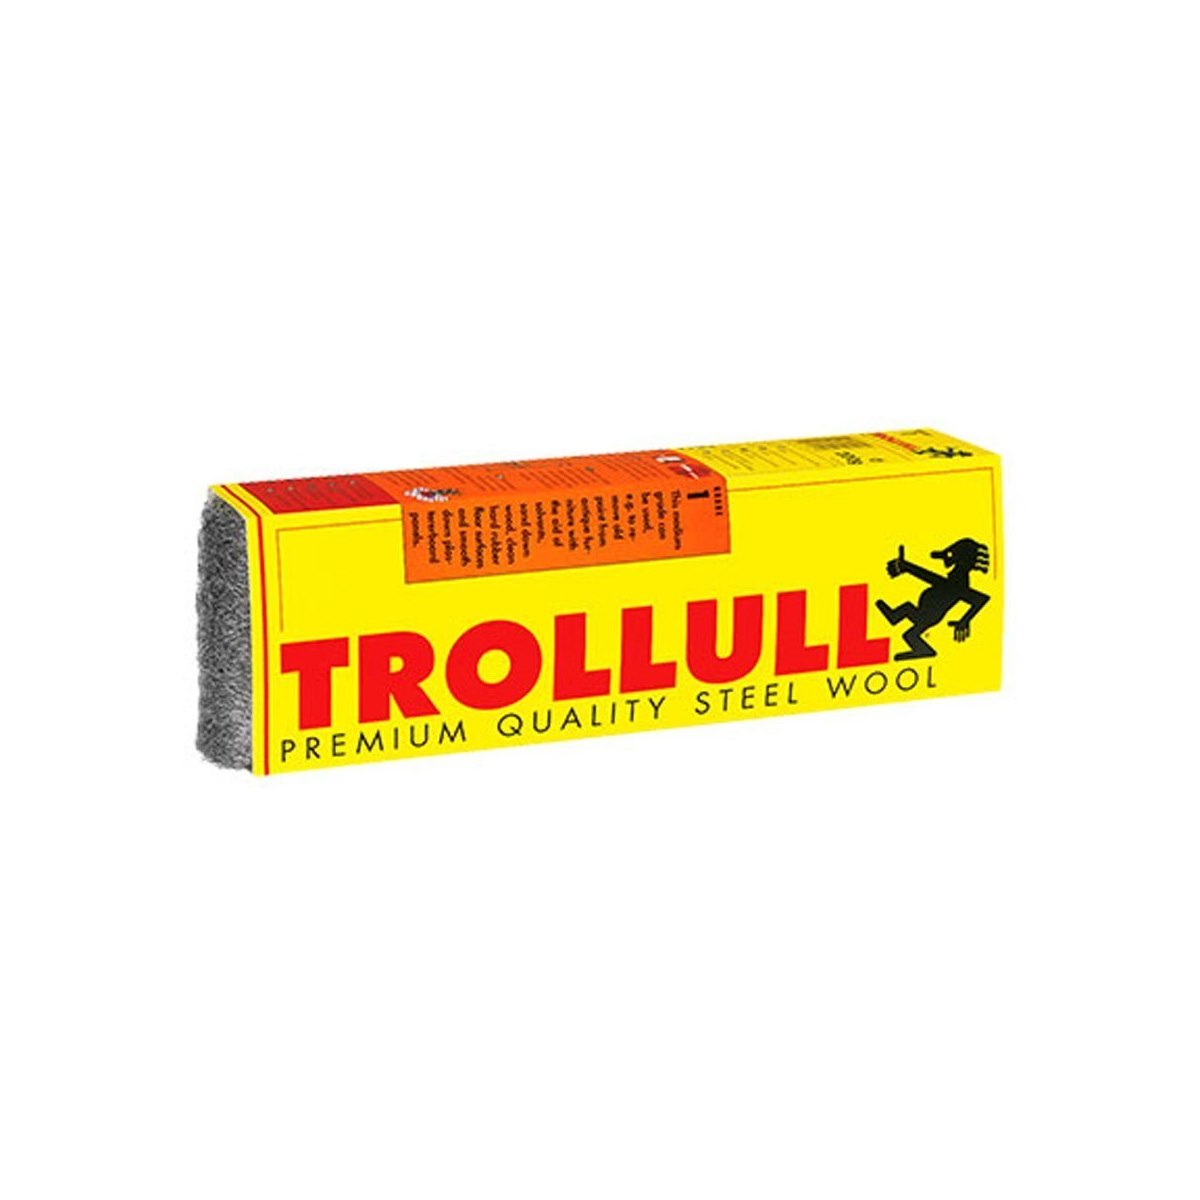 Trollull Steel Wool 200g Sleeve 0